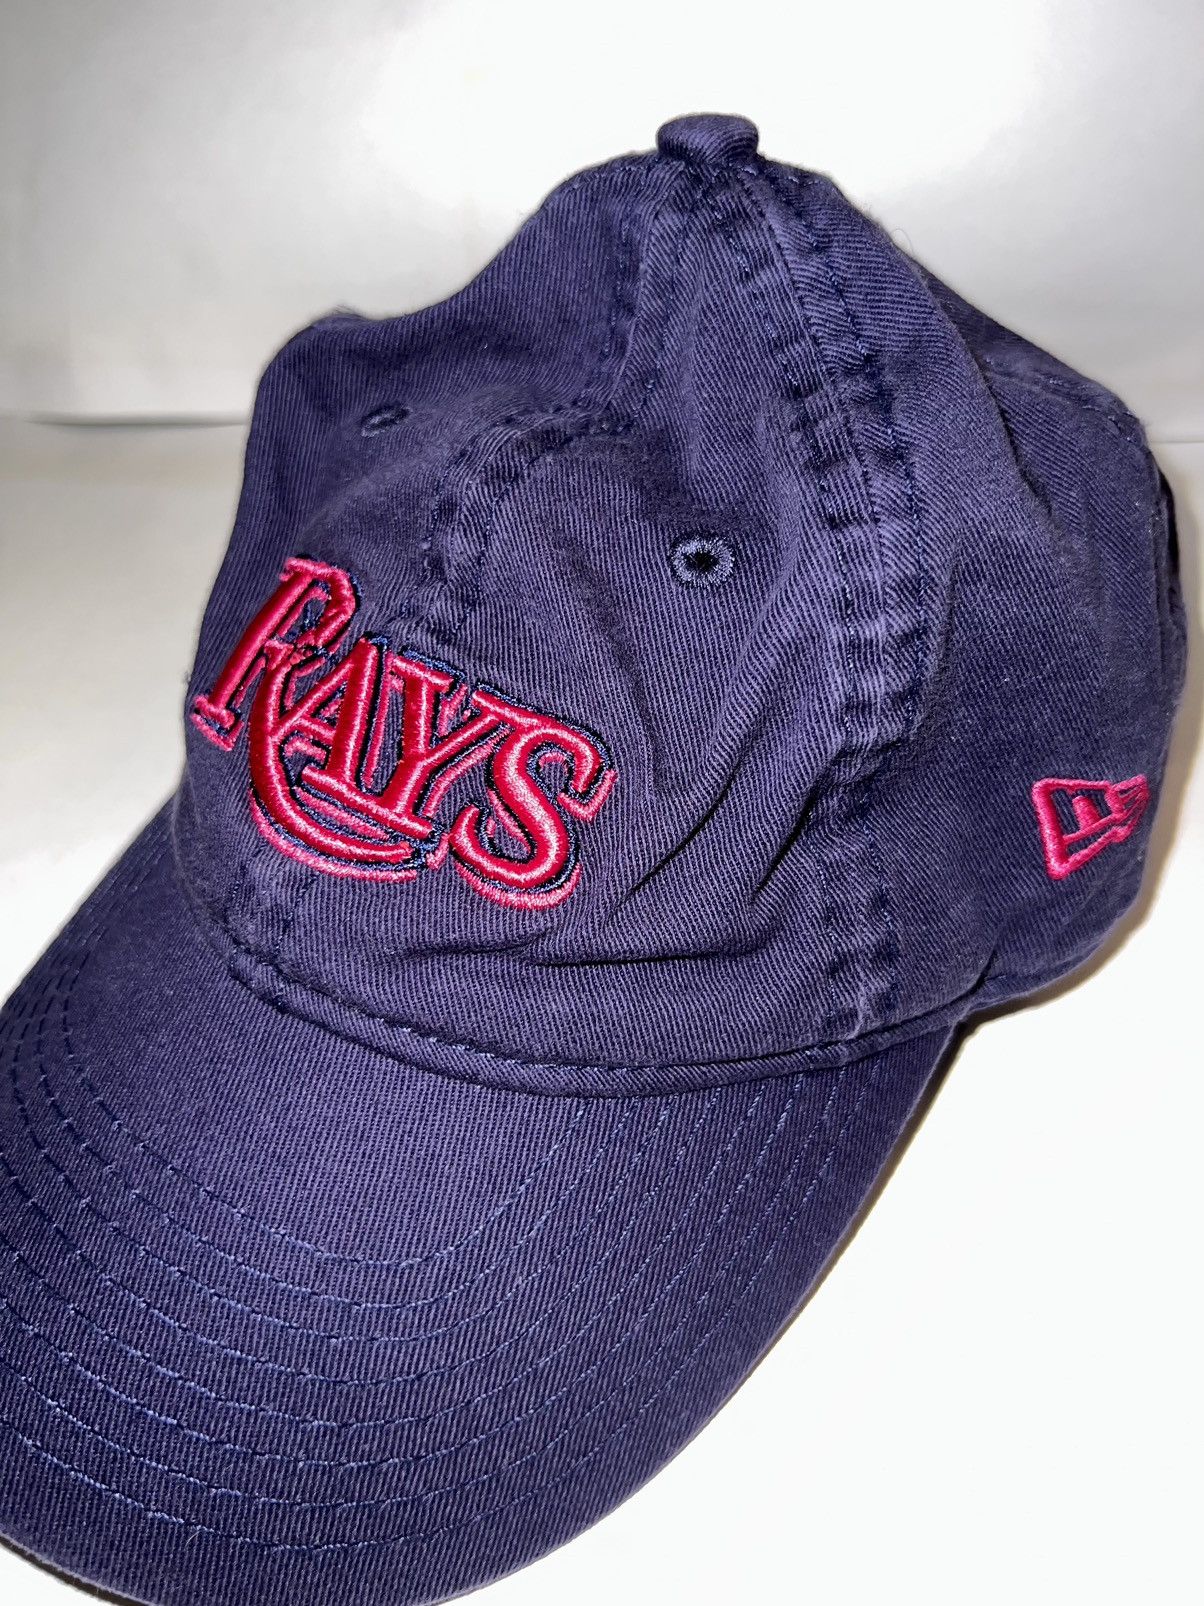 Tampa Bay Rays Vintage Hat